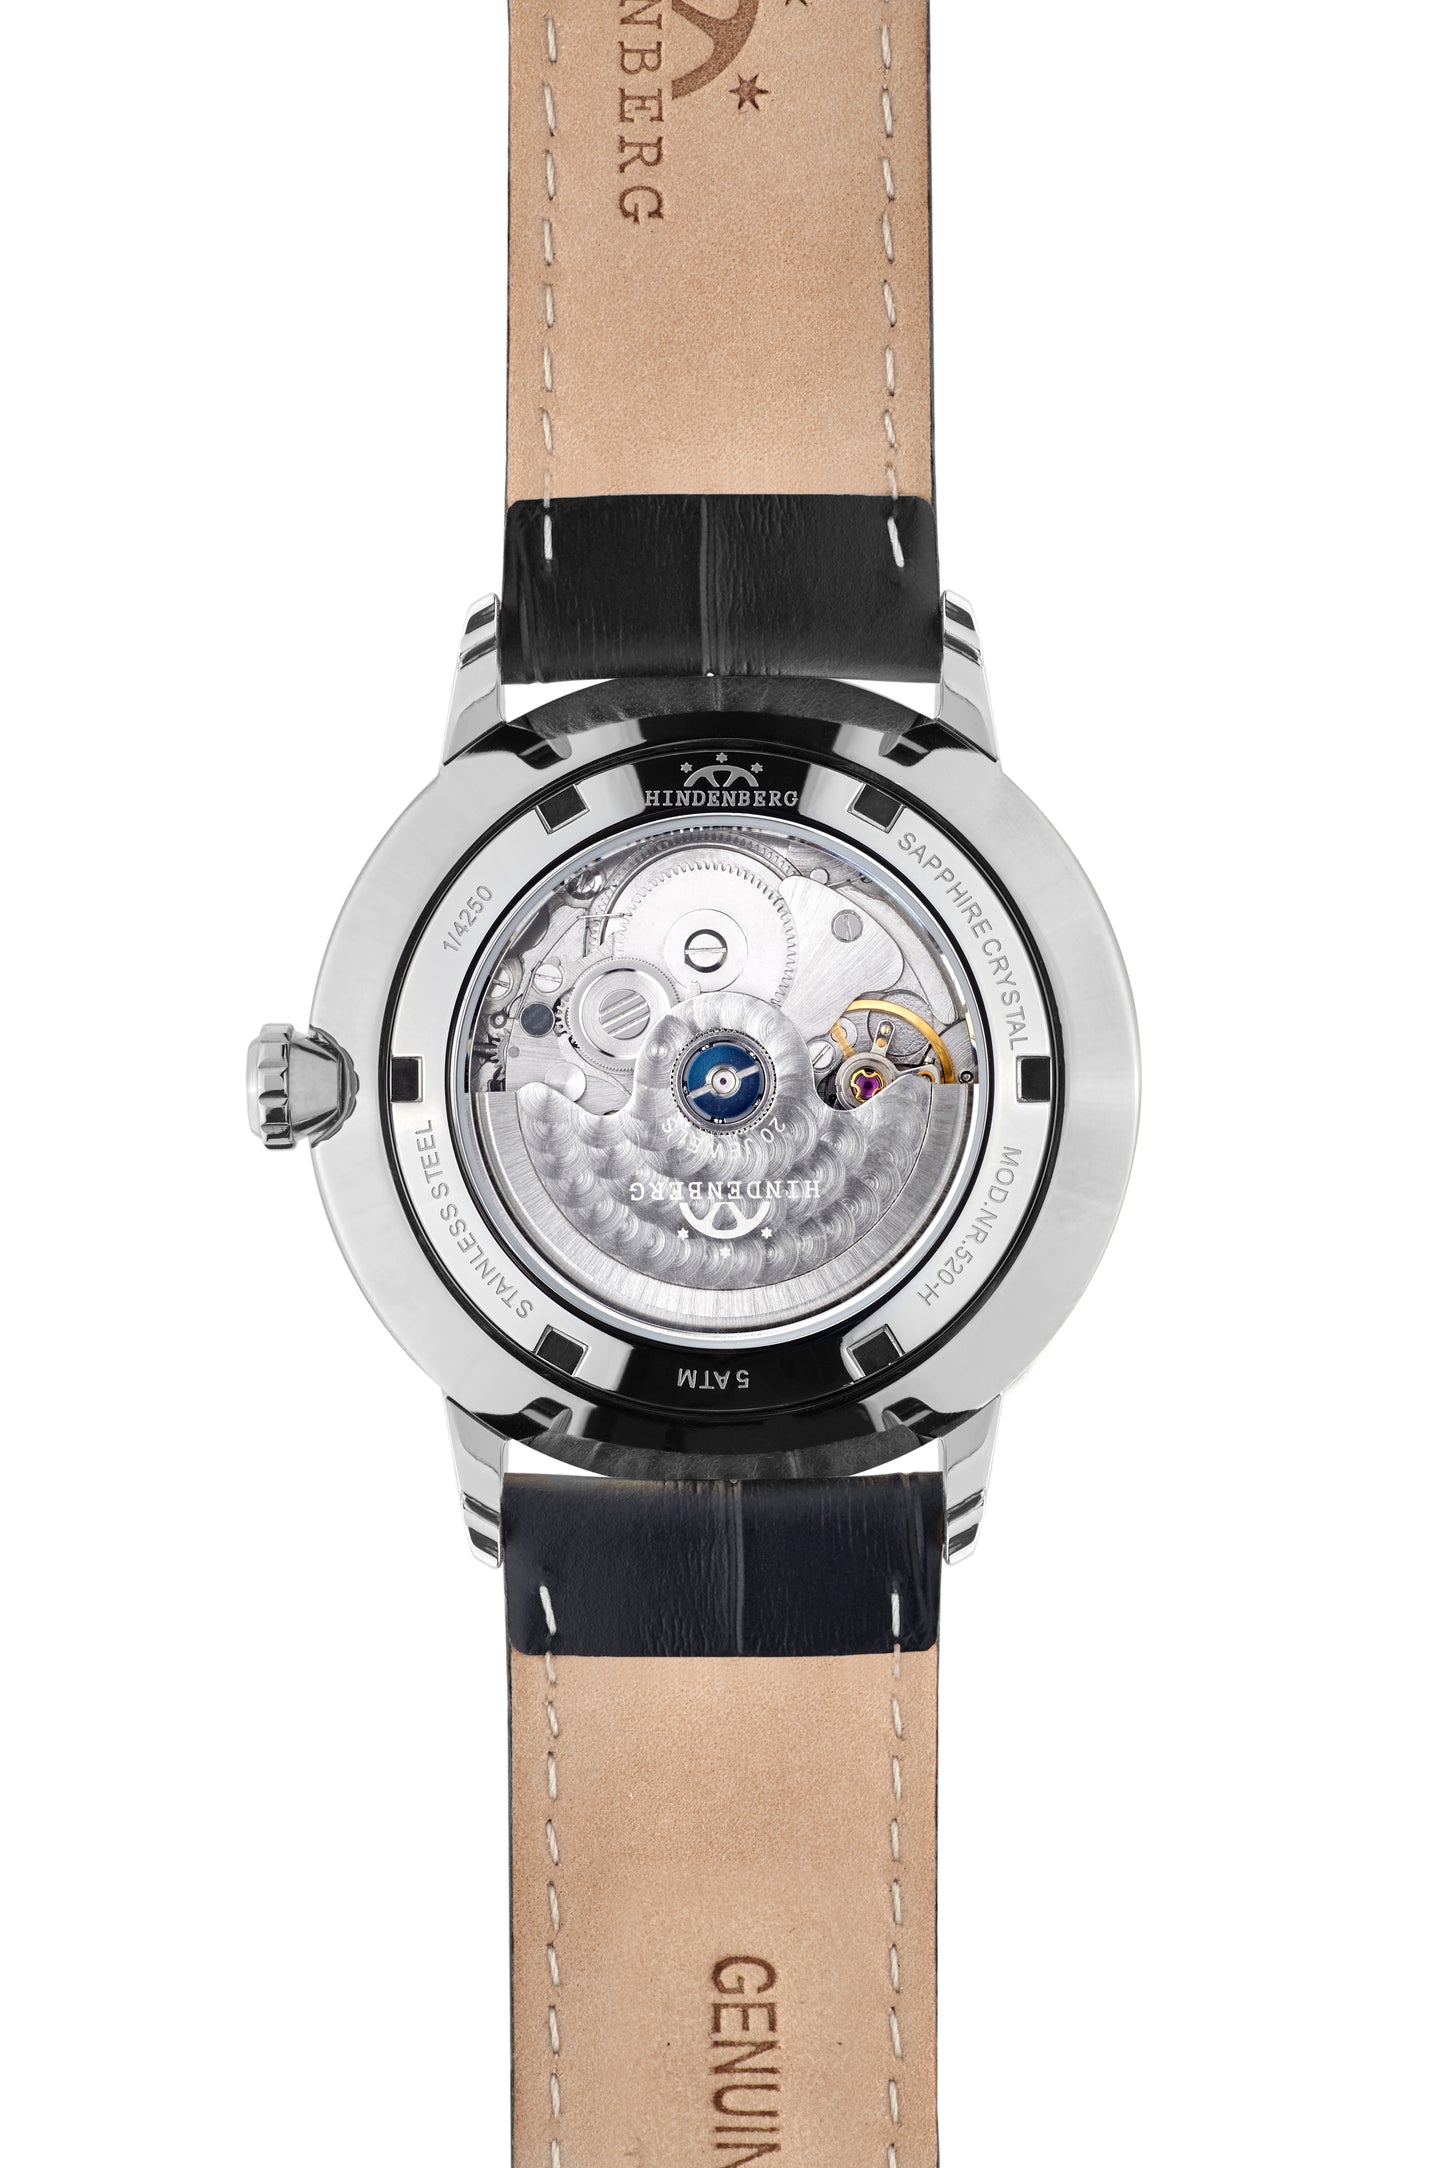 Automatic watches — Delta Dart — Hindenberg — steel silver